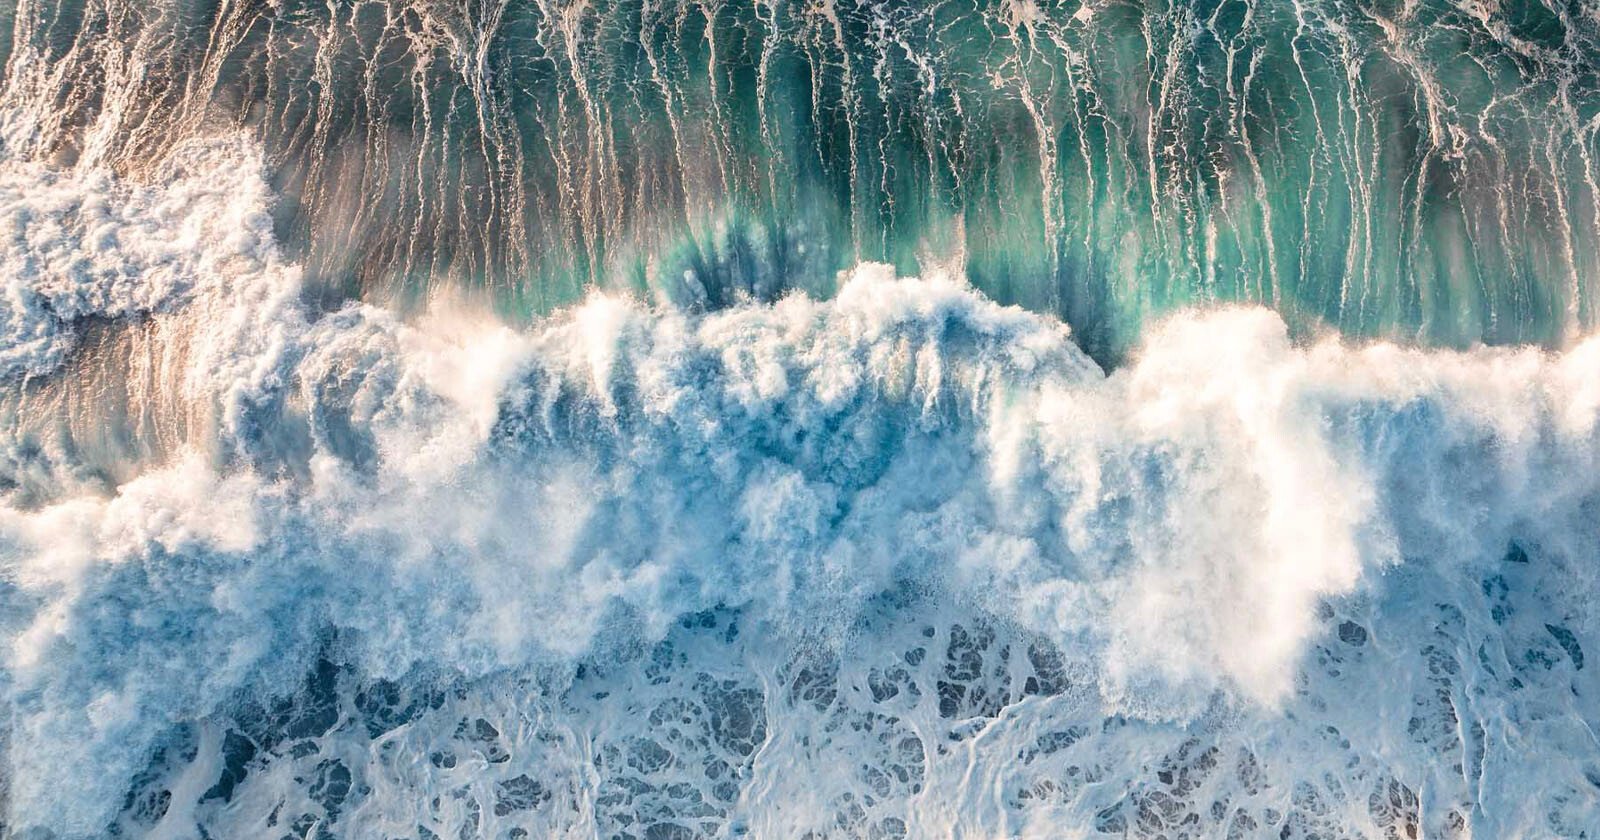 Photographers Creative Way of Shooting Hawaiis Most Powerful Waves